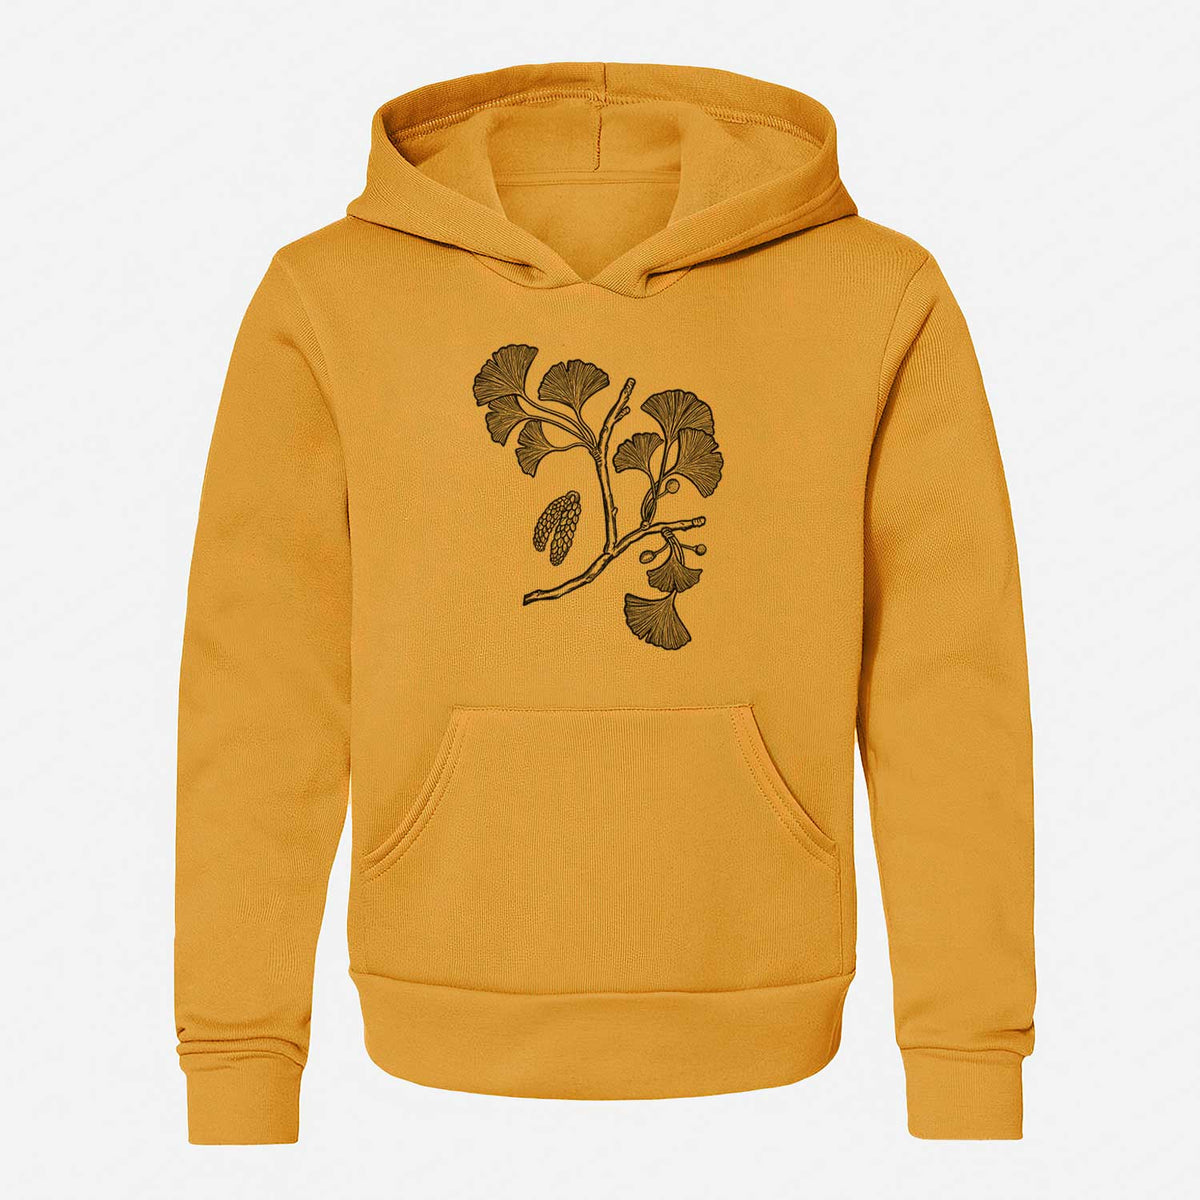 Ginkgo Biloba - Ginkgo Tree Stem with Leaves - Youth Hoodie Sweatshirt